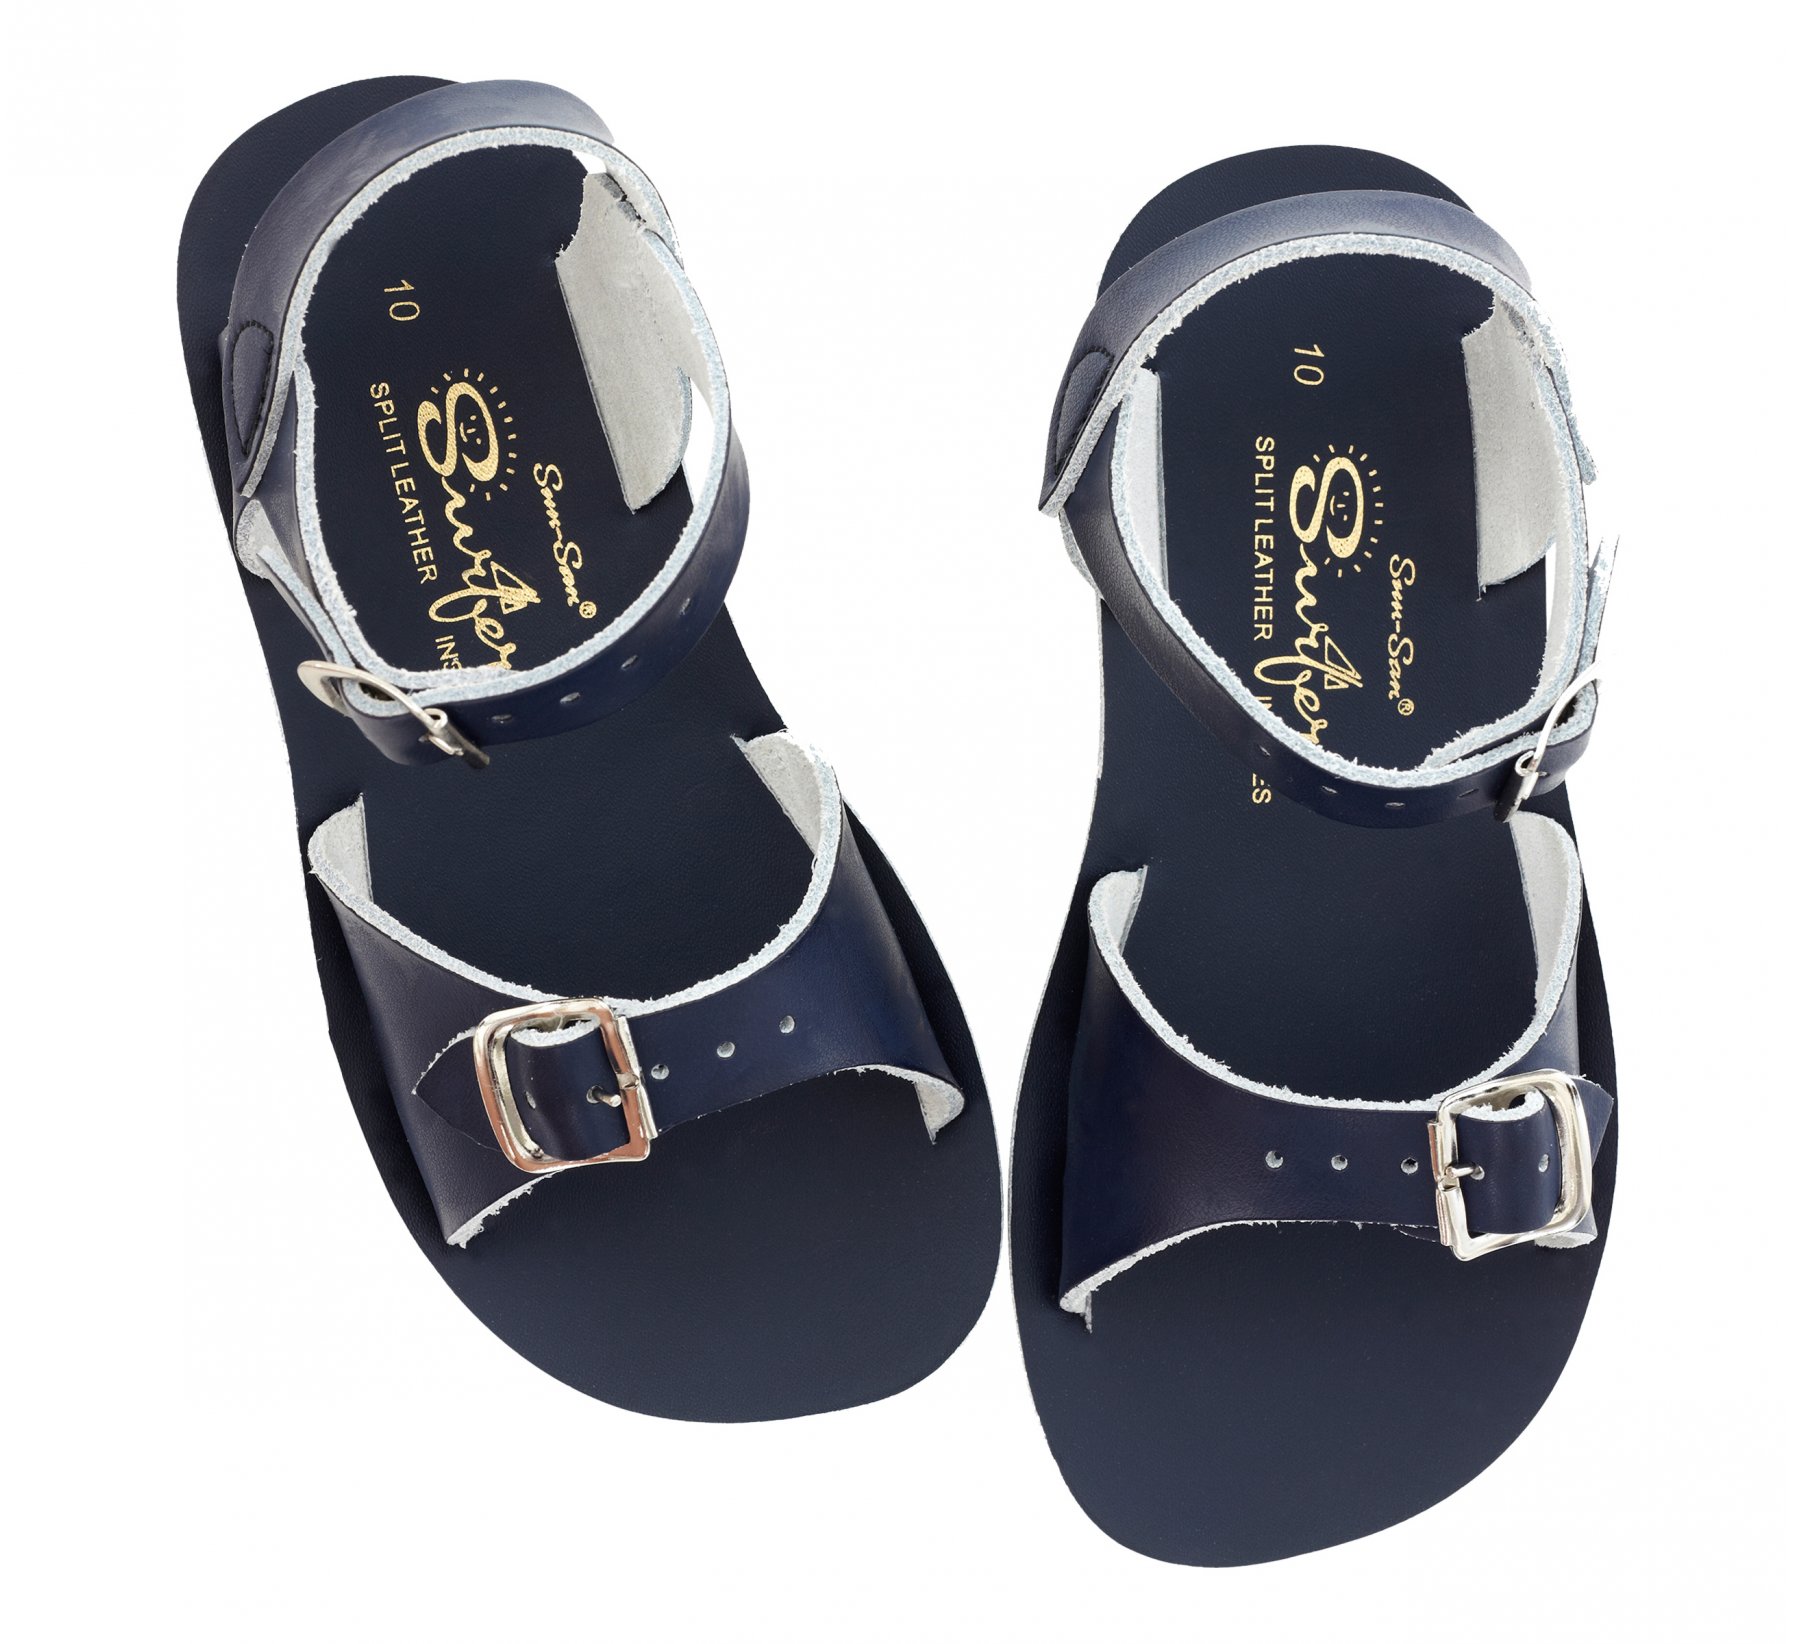 Surfer Biru Kelasi - Salt Water Sandals